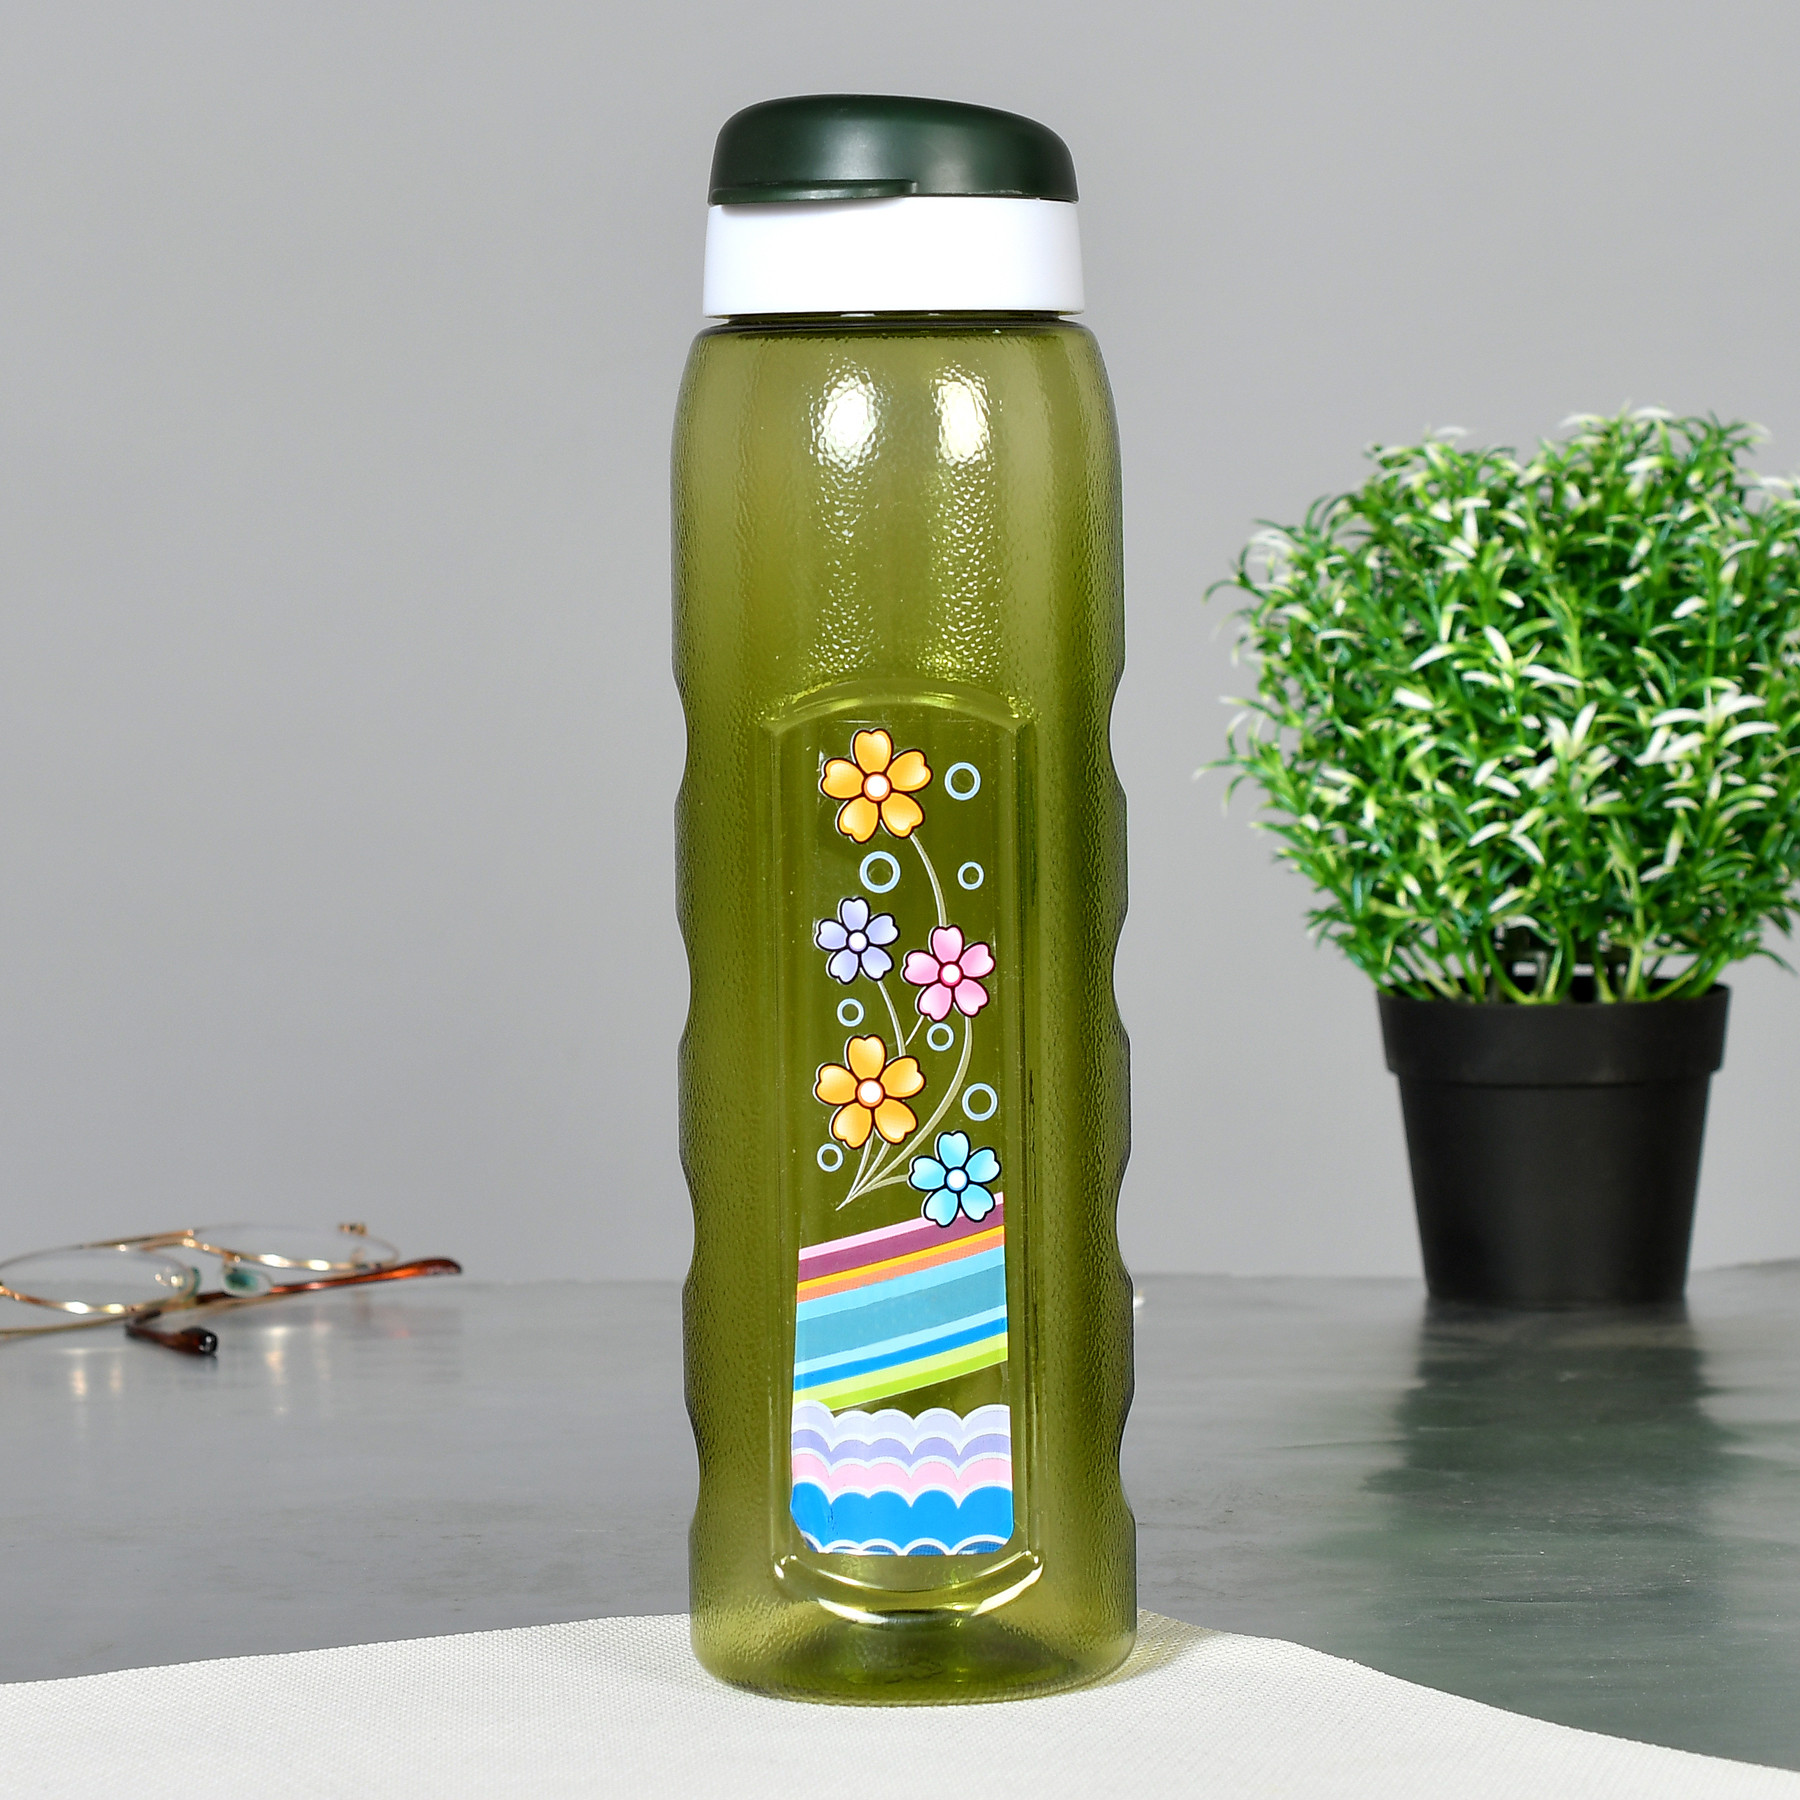 Kuber Industries Unbreakable BPA & Leak Free Plastic Water Bottle With Sipper-1 Litre, Pack of 4 (Green & Sky Blue)